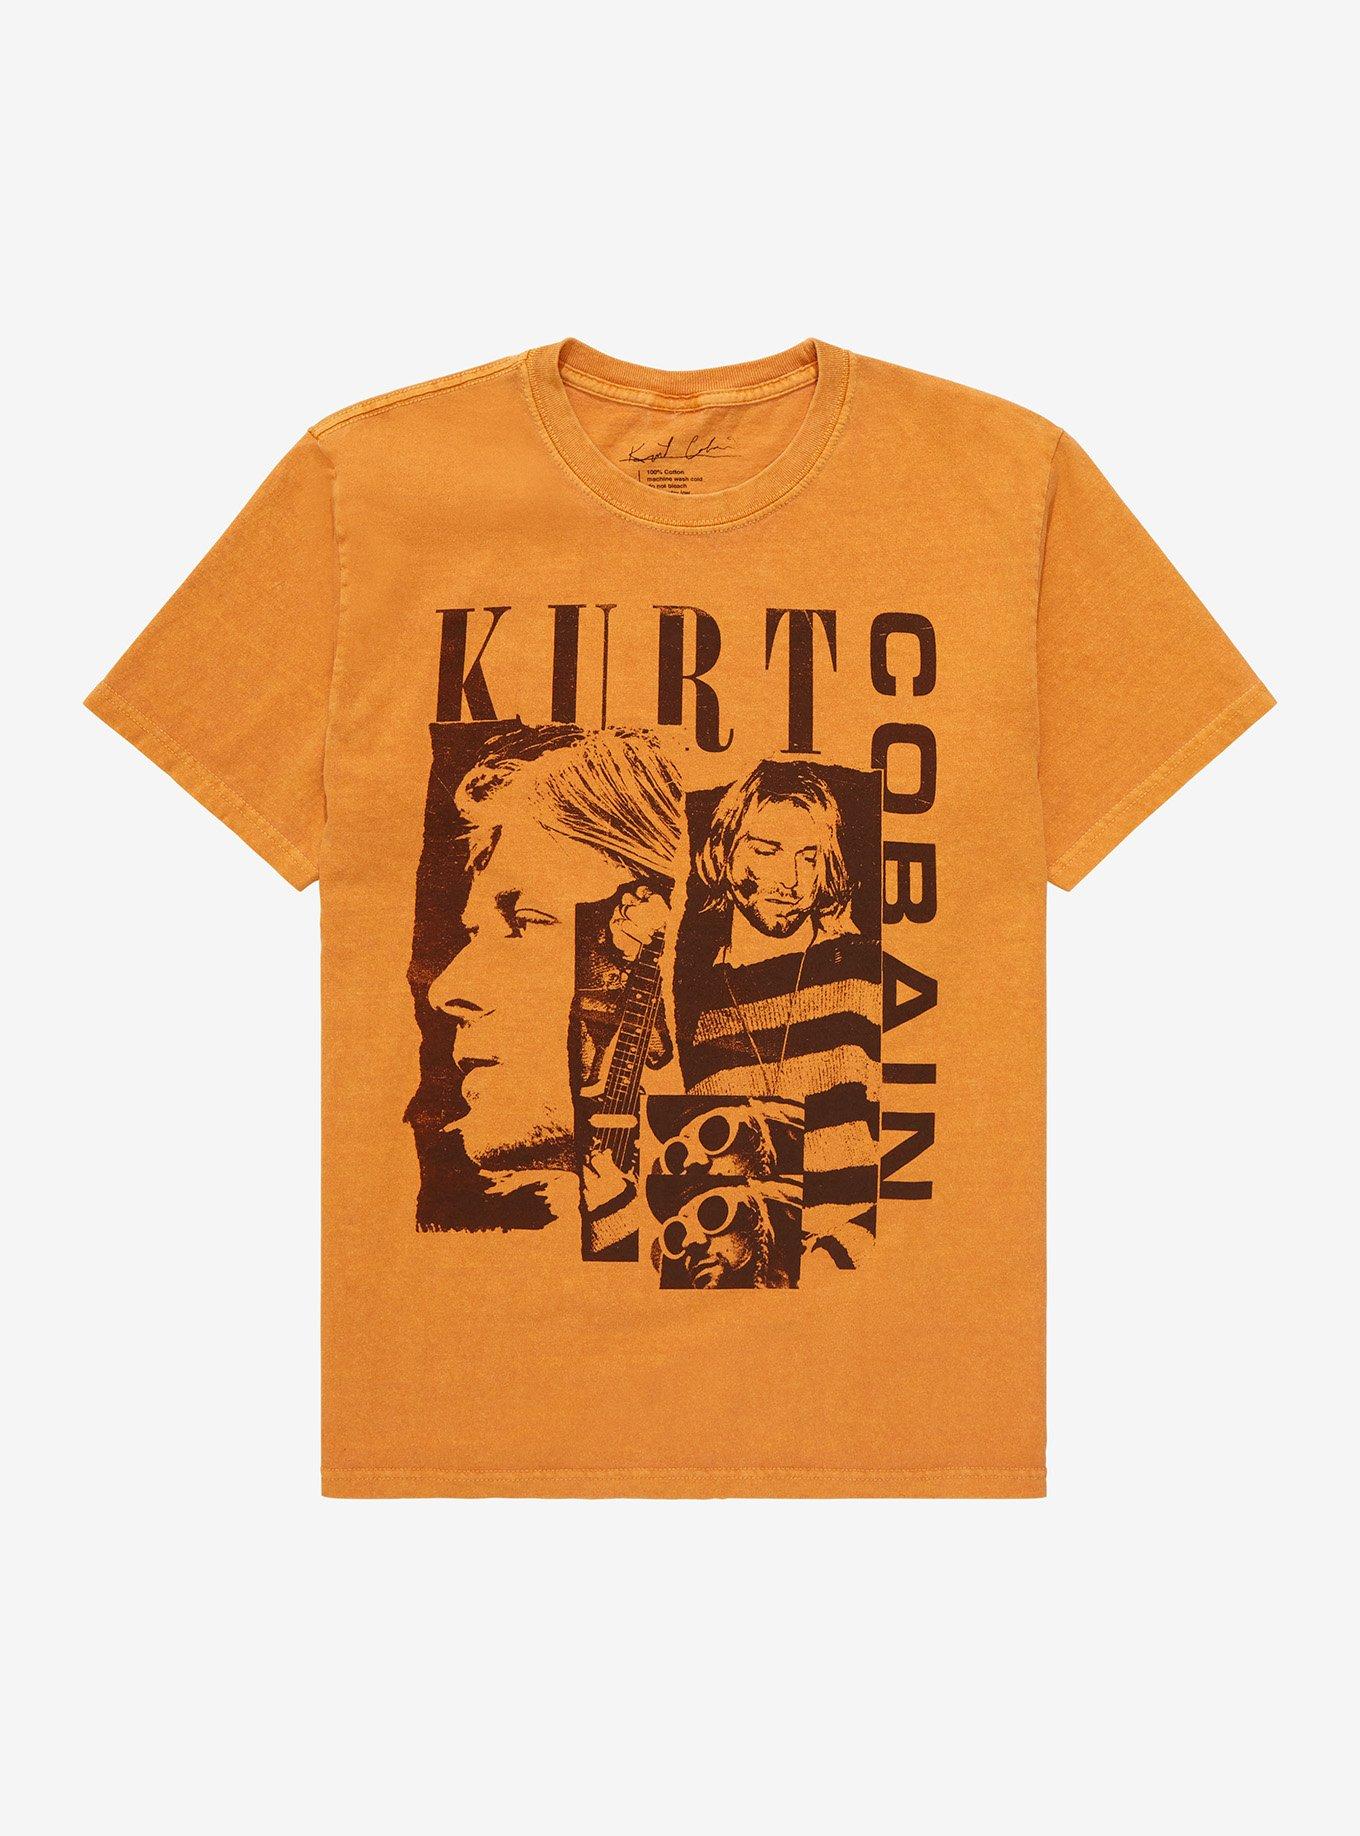 Kurt Cobain Photo Collage Boyfriend Fit Girls T-Shirt, ORANGE, hi-res